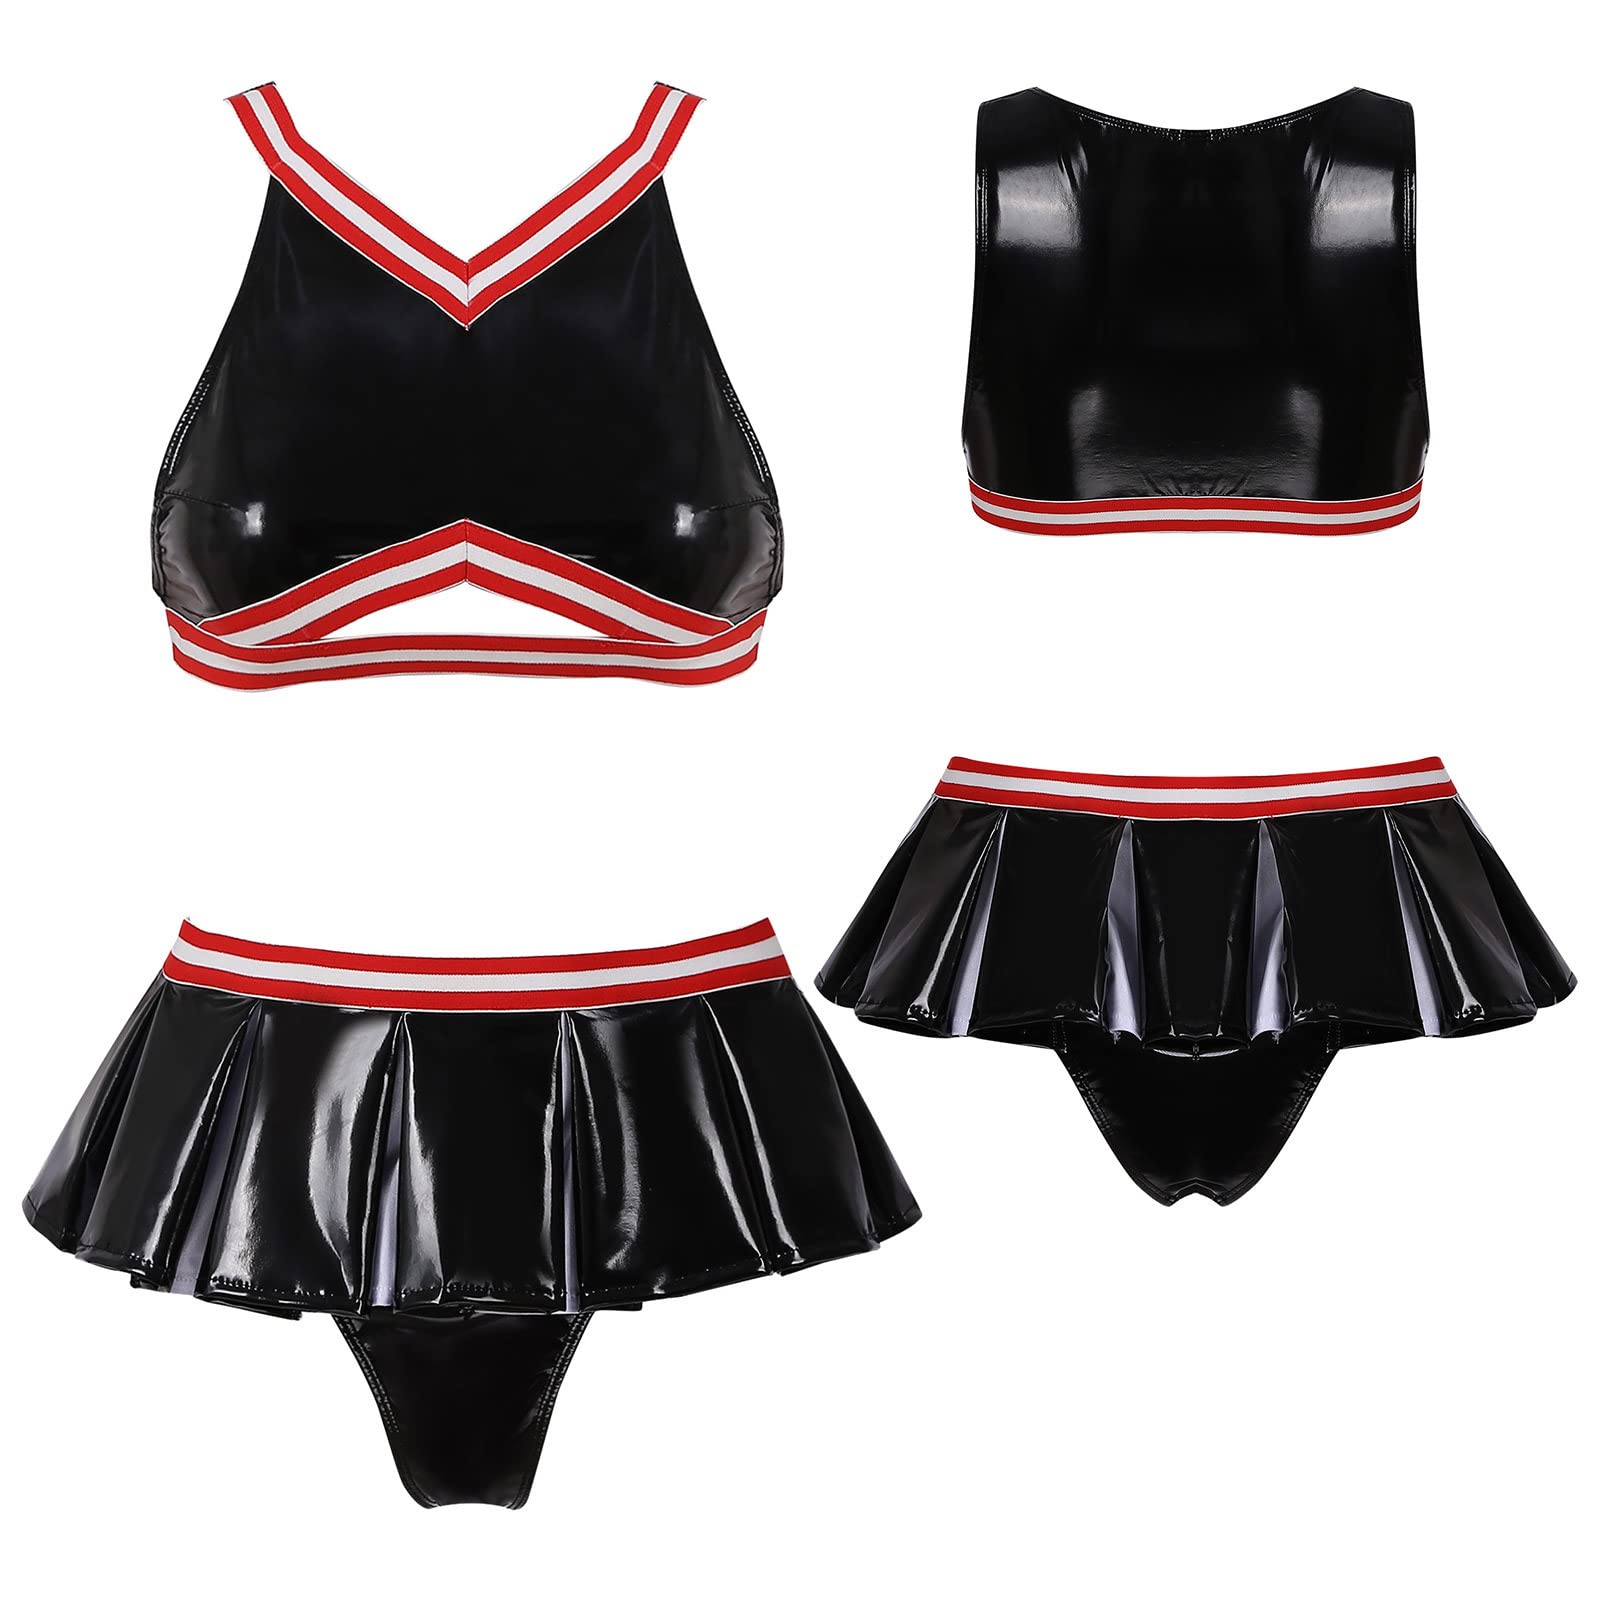 Damen Latex Lackleder Cheerleading Cosplay Outfits V-Ausschnitt Crop Top mit Falten-Minirock,Schwarz,XL